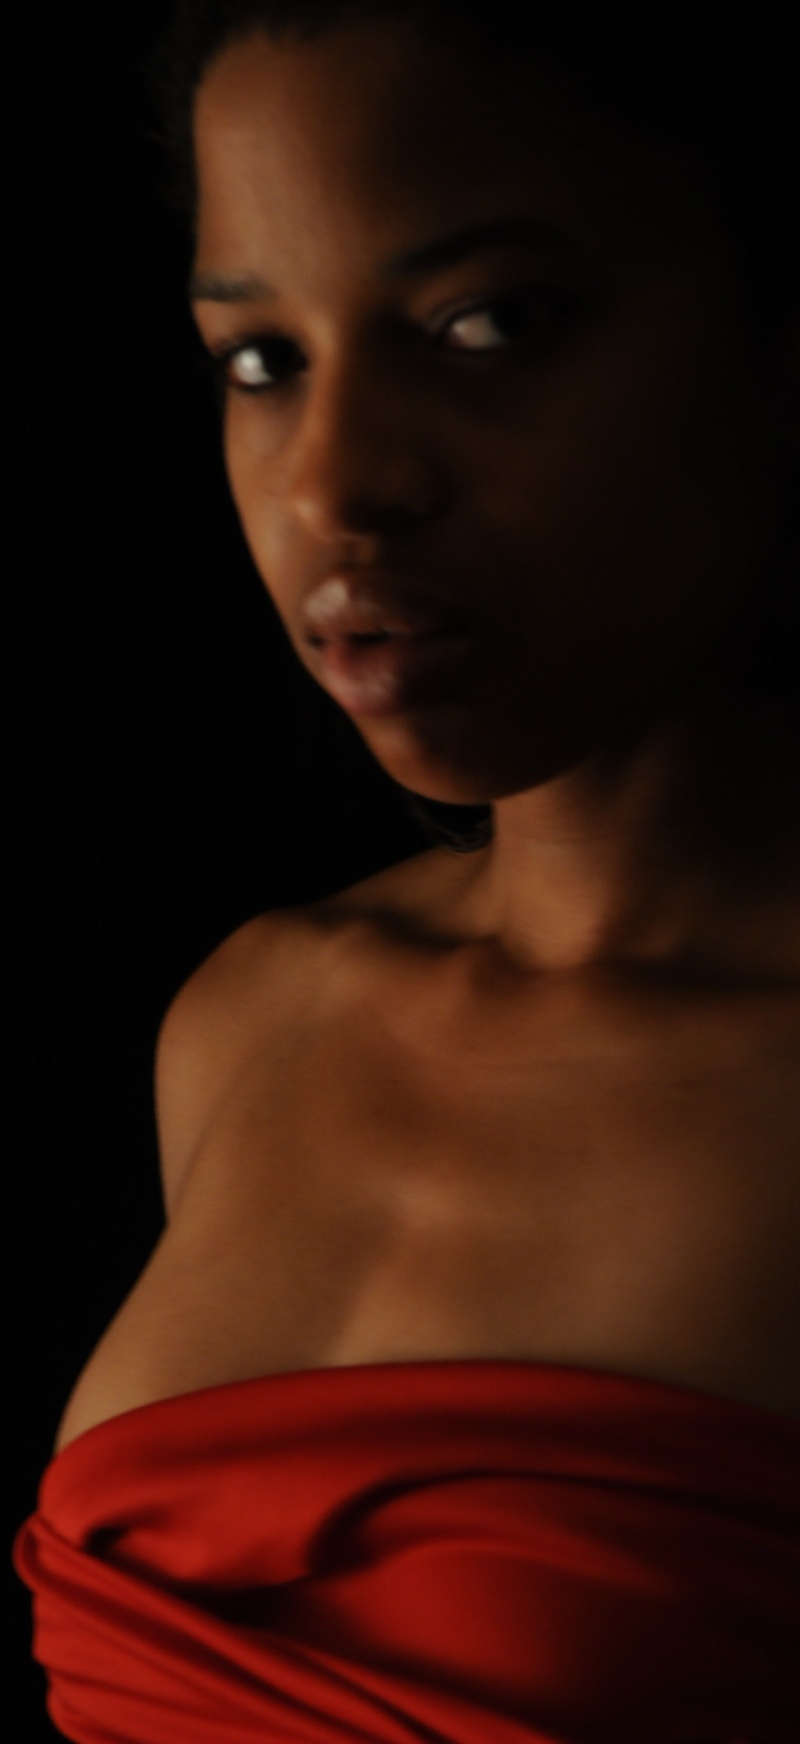 Female model photo shoot of Niah Bianca by Prolific Shadows  LLC in houston tx